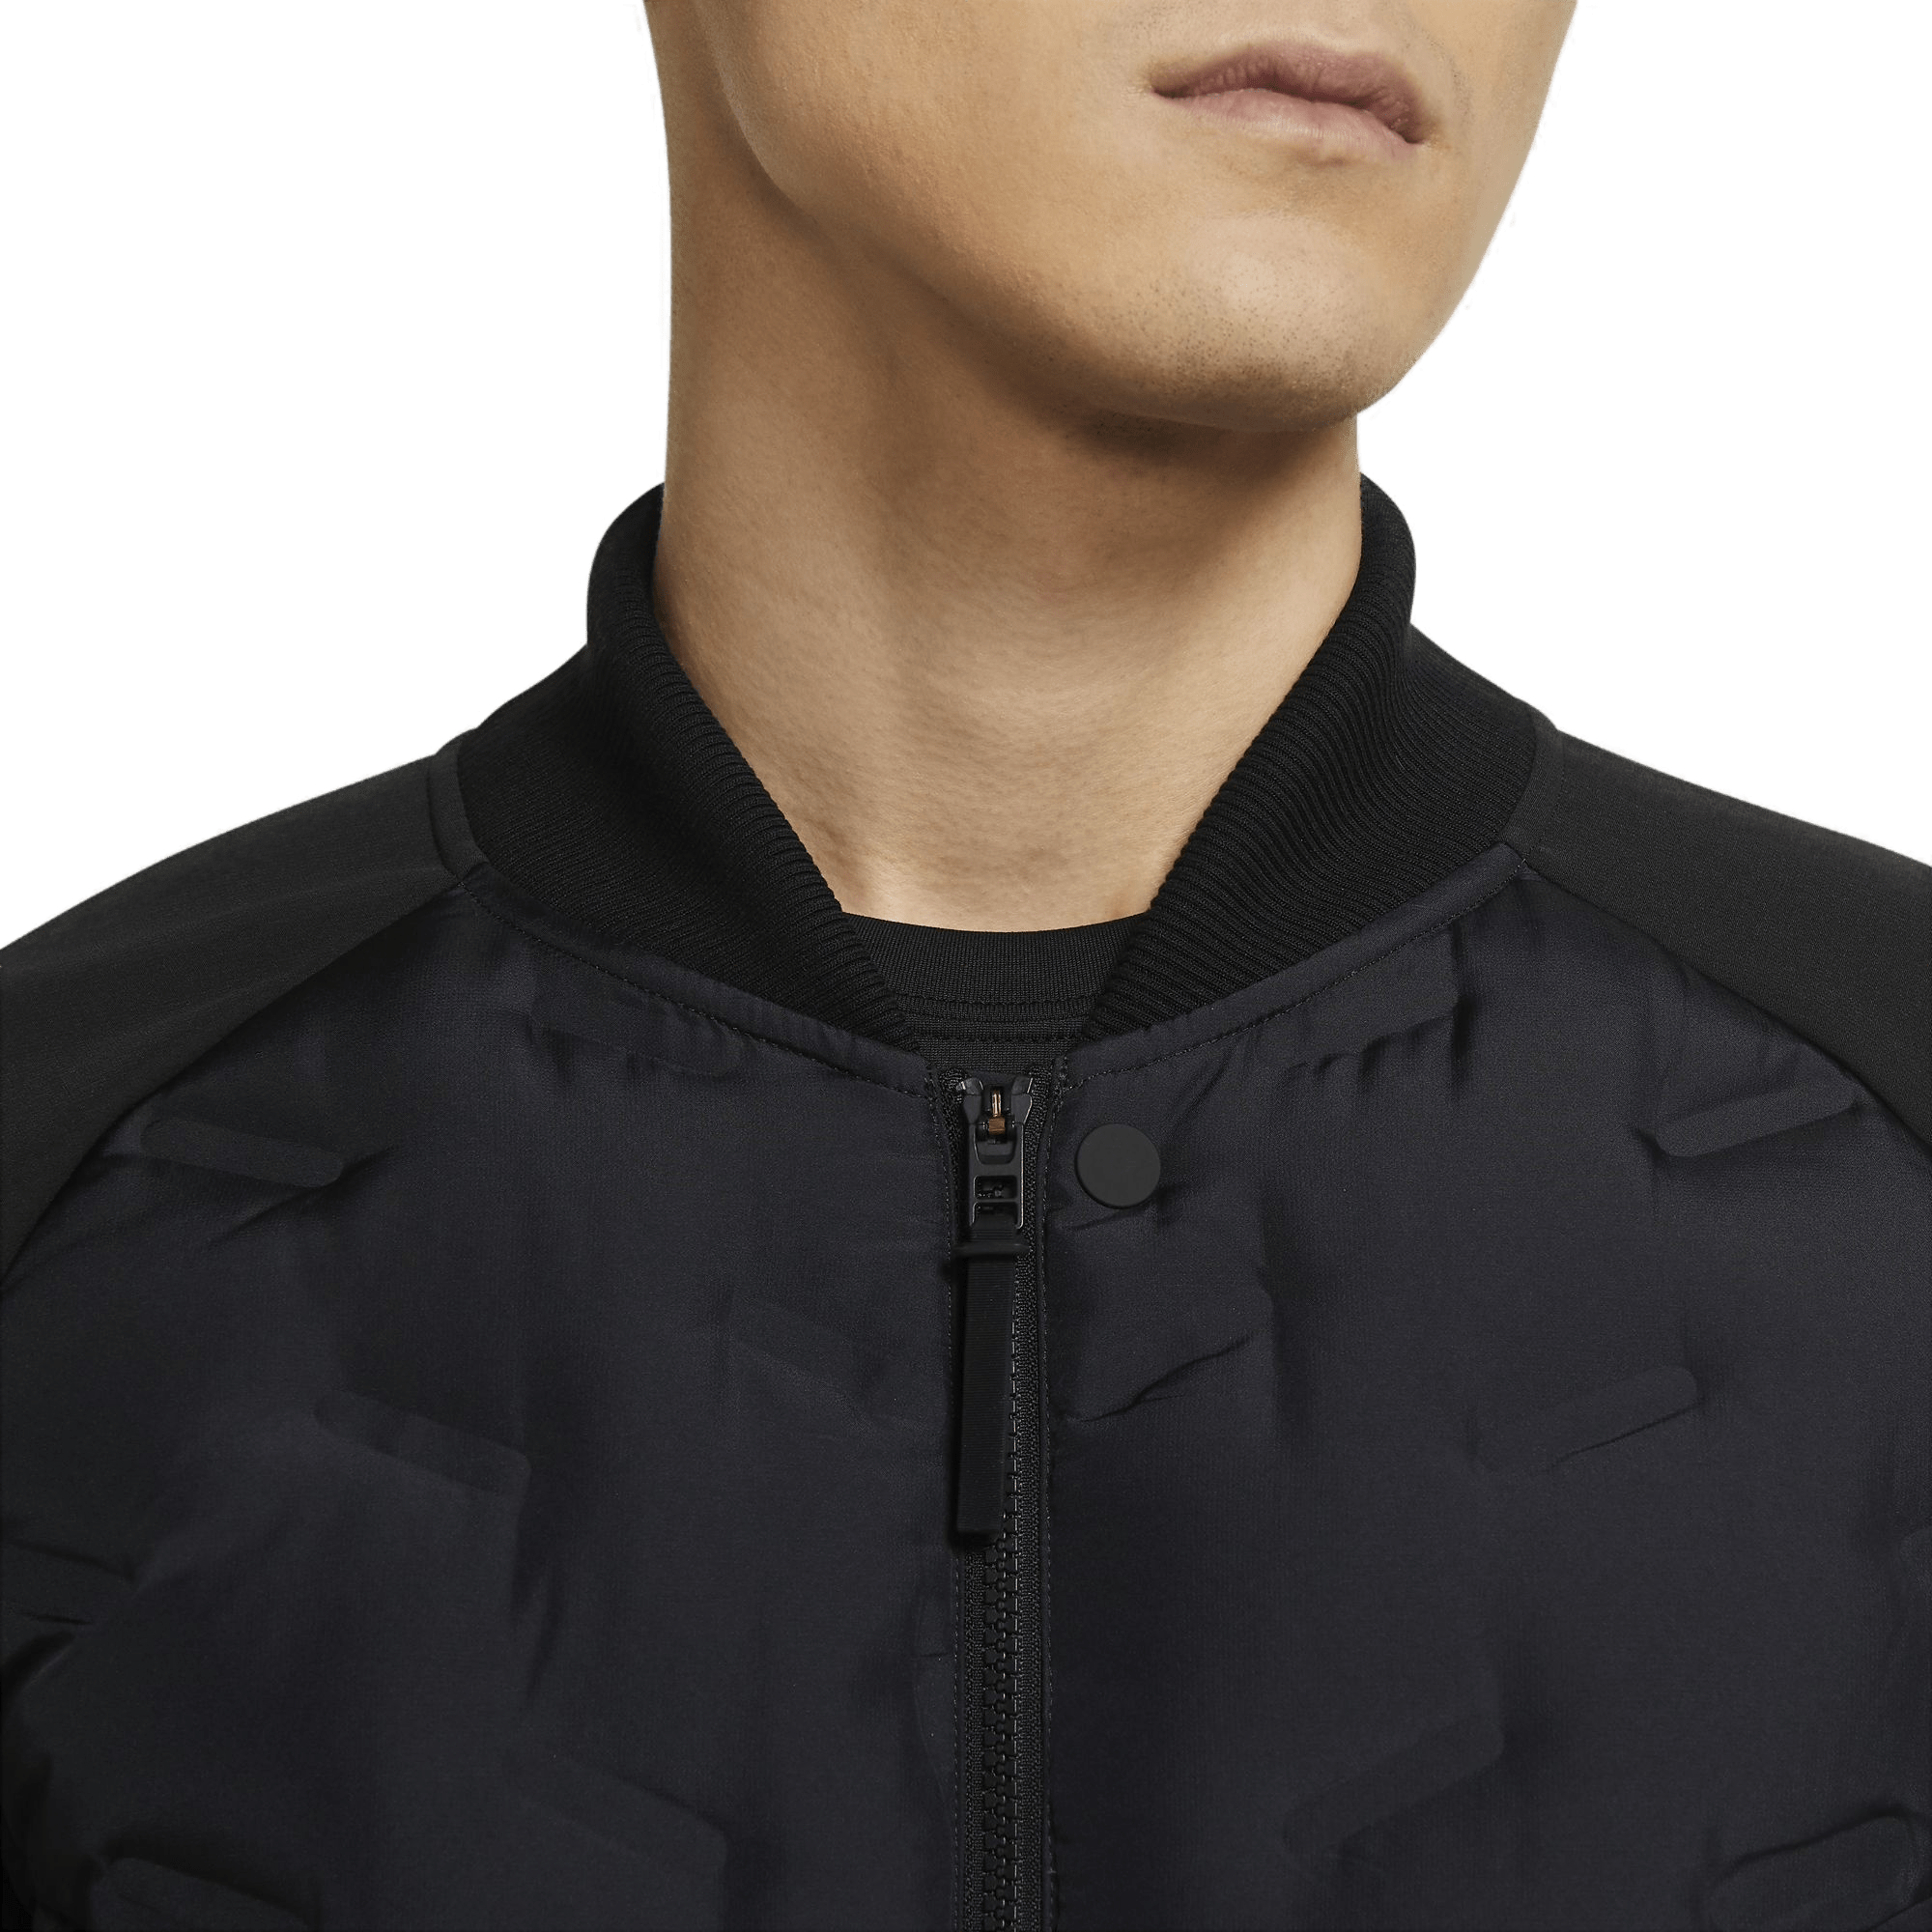 Nike | DA2885-010 | Therma-FIT ADV Jacket Full Zip | Black